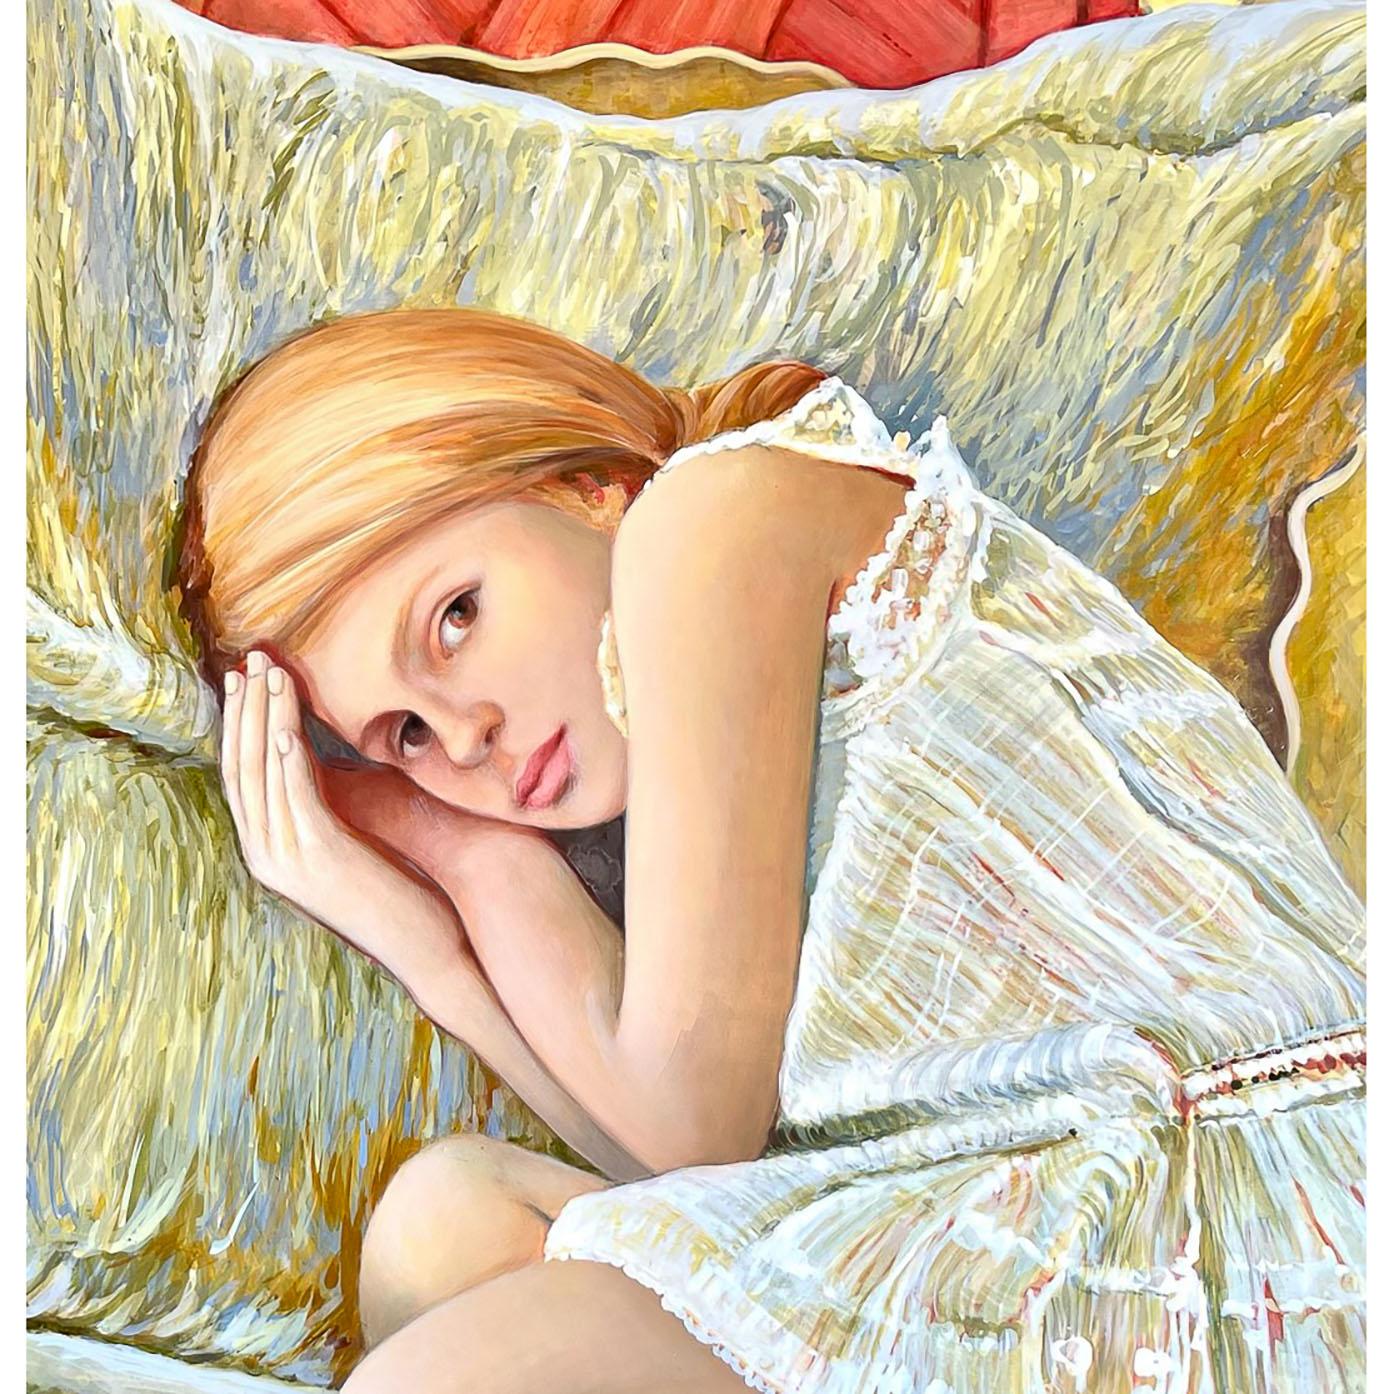 Julia Lambright
Ask Alice
Egg tempera on panel
2013
Image: 35.5” x 31.5”
Framed: 38” x 33.5”
